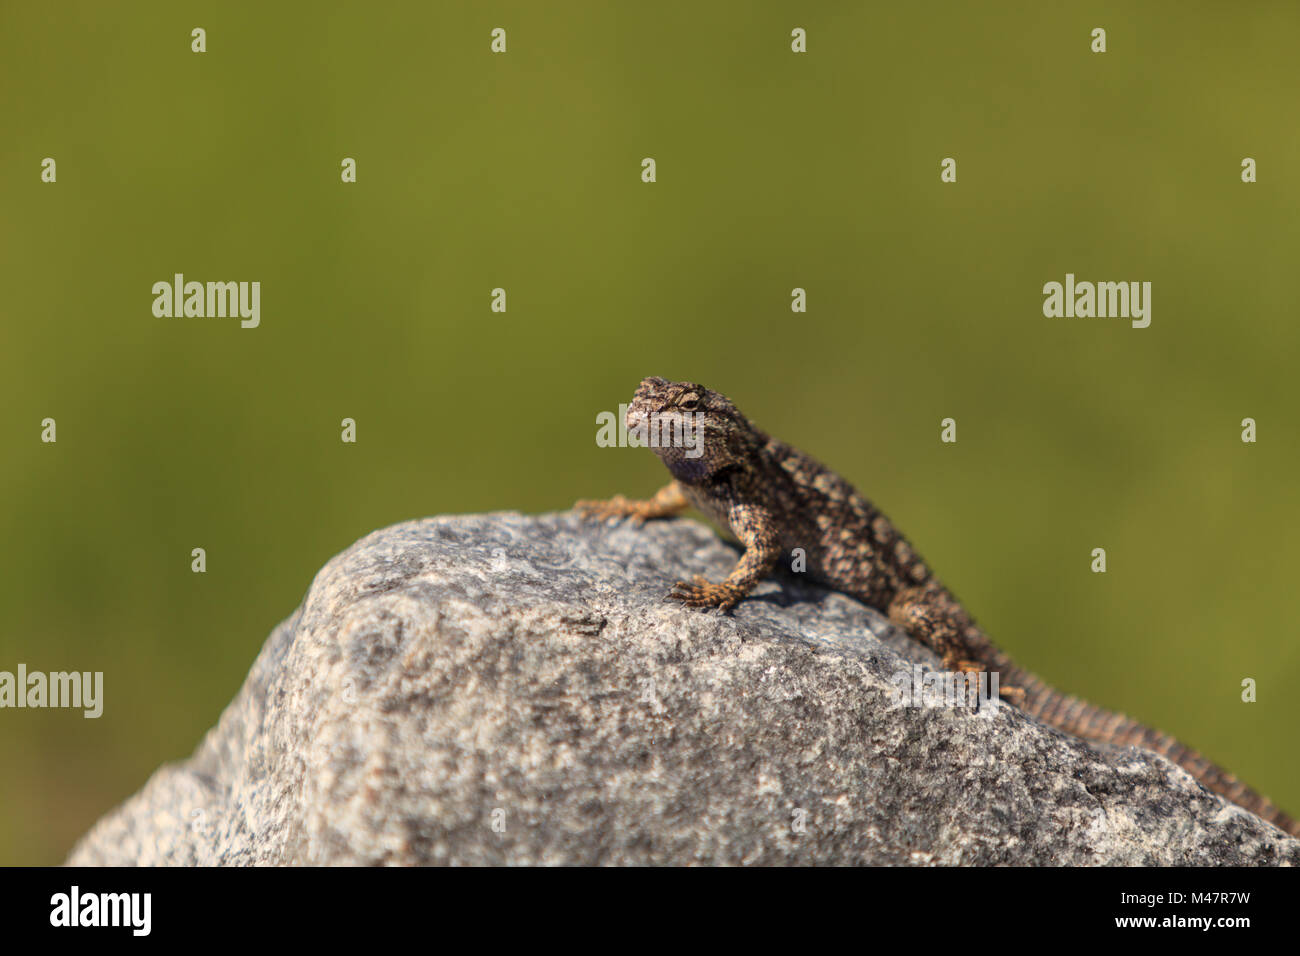 Brown common fence lizard, Sceloporus occidentalis Stock Photo